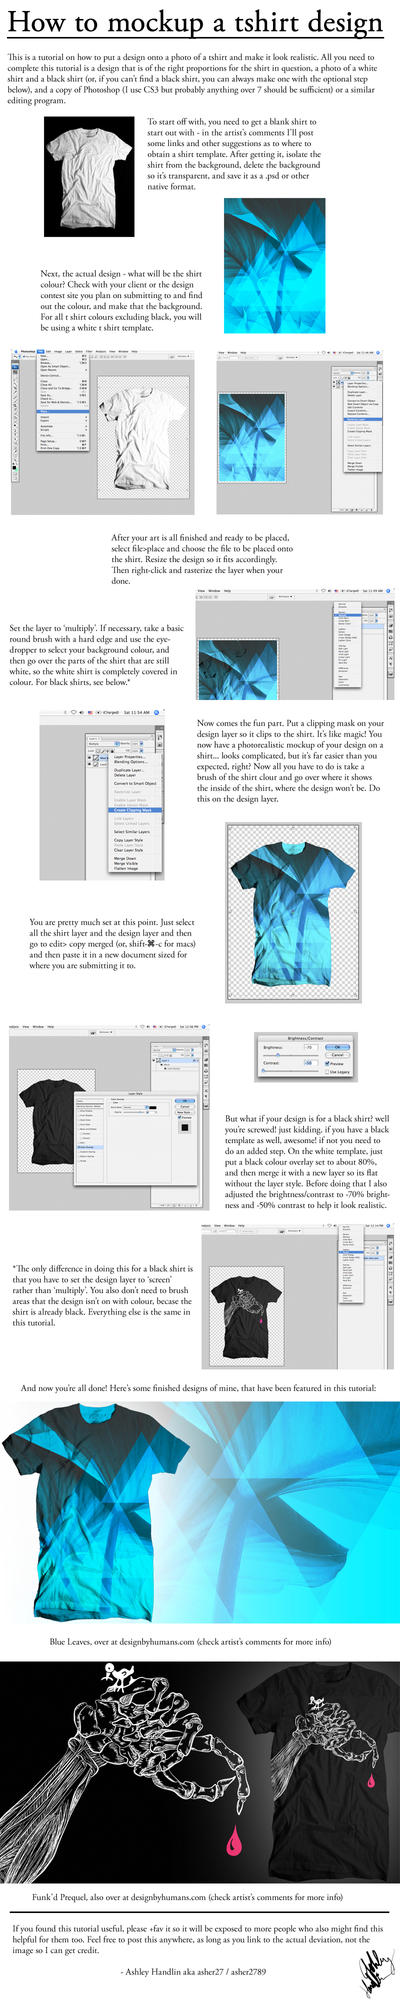 Download T shirt mockup tutorial by asher27 on DeviantArt